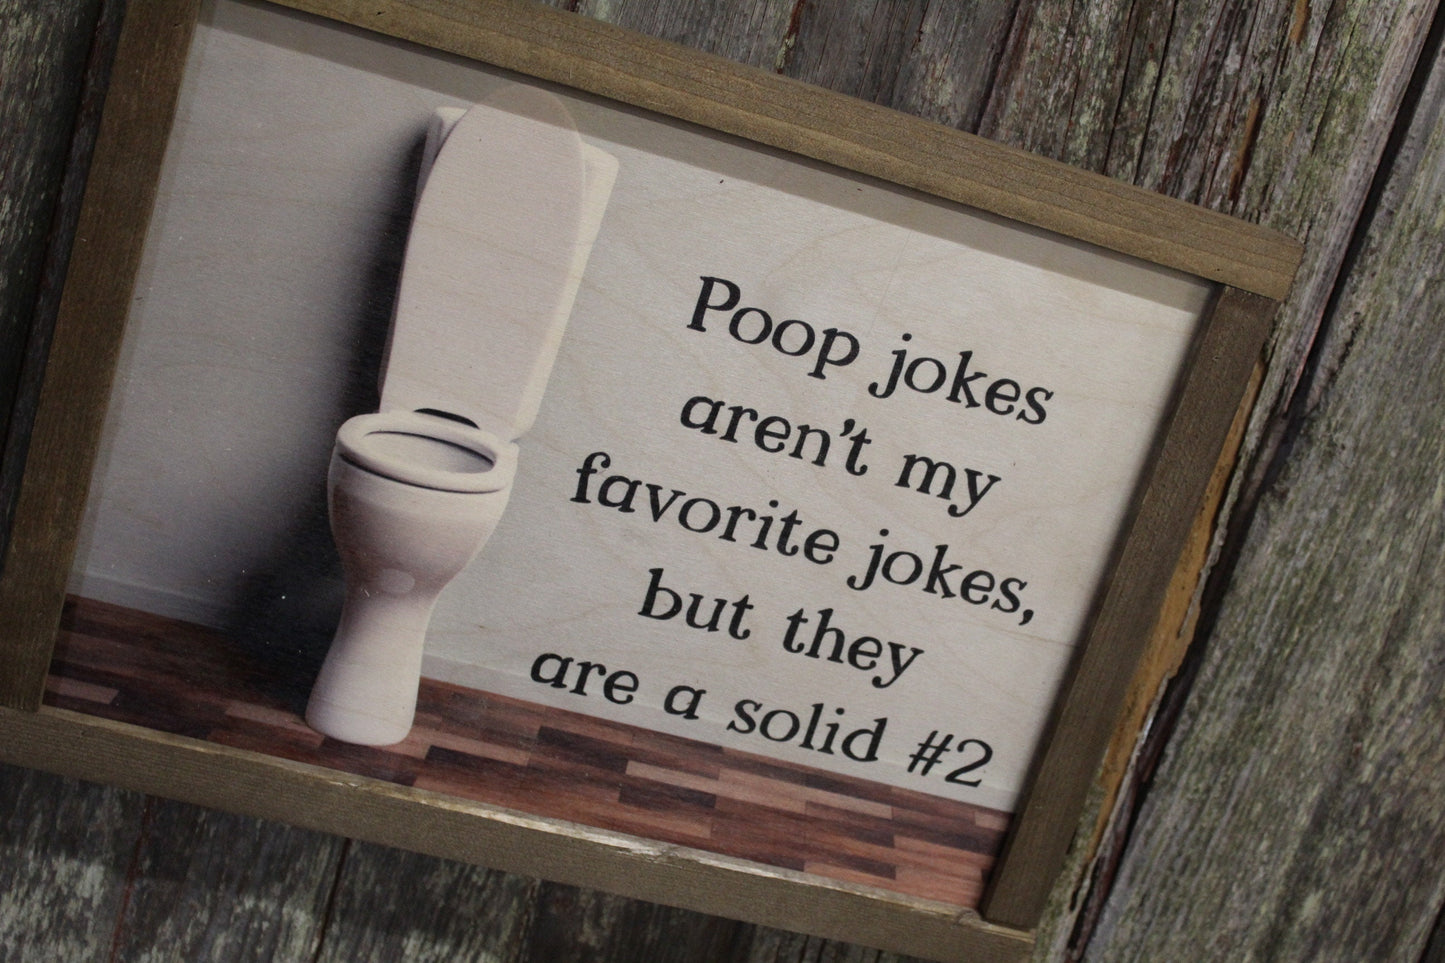 Bathroom Wood Sign Poop Jokes Aren't MY Favorite But Are A Solid #2 Silly Toilet Joke Gift Print Primitive Rustic Dad Joke Restroom